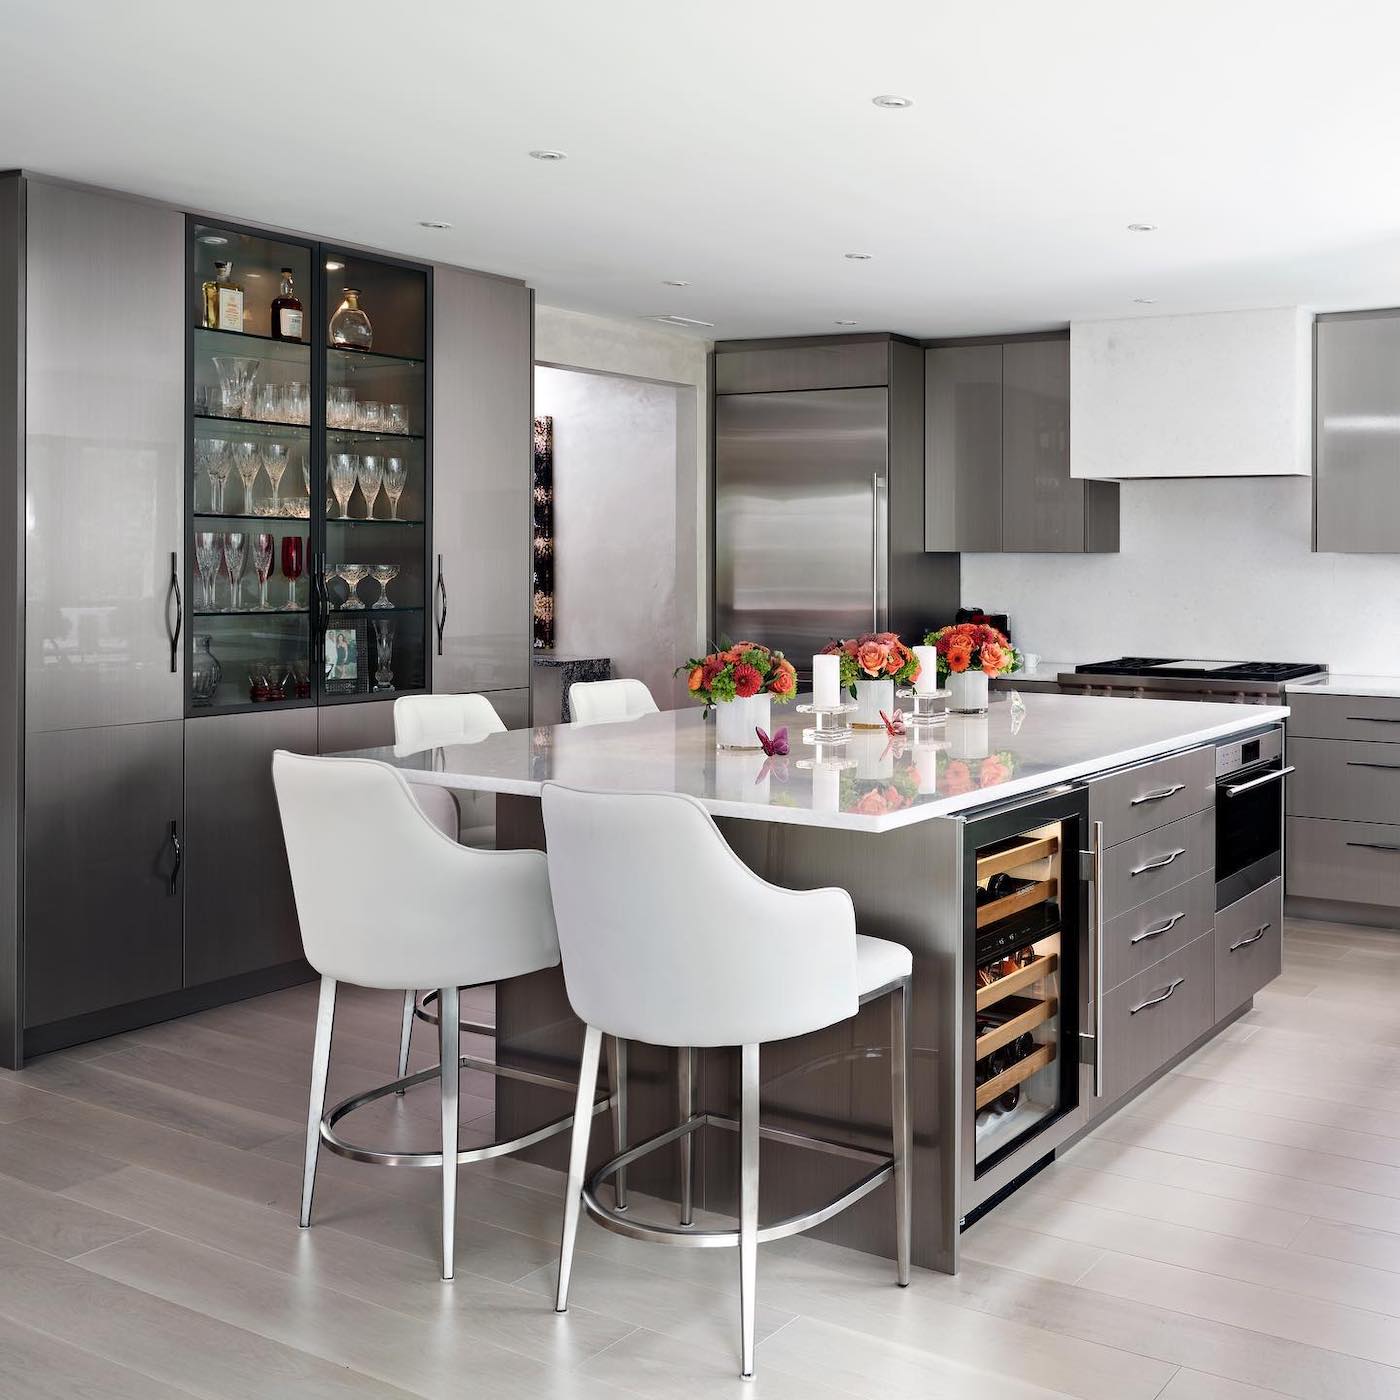 newton kitchens and design, custom cabinetry, custom kitchens